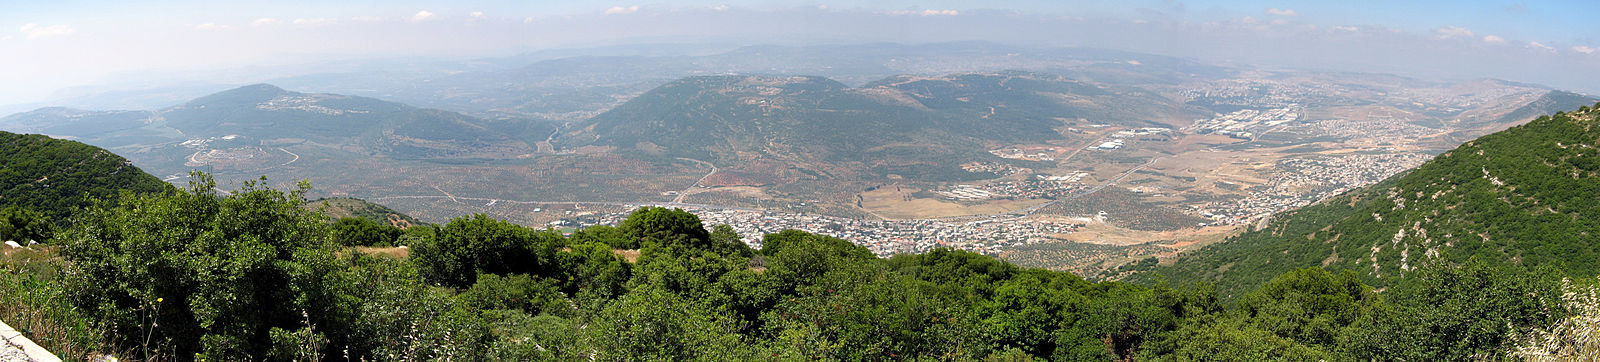 Panorama from Ari Mountain in the Upper Galilee